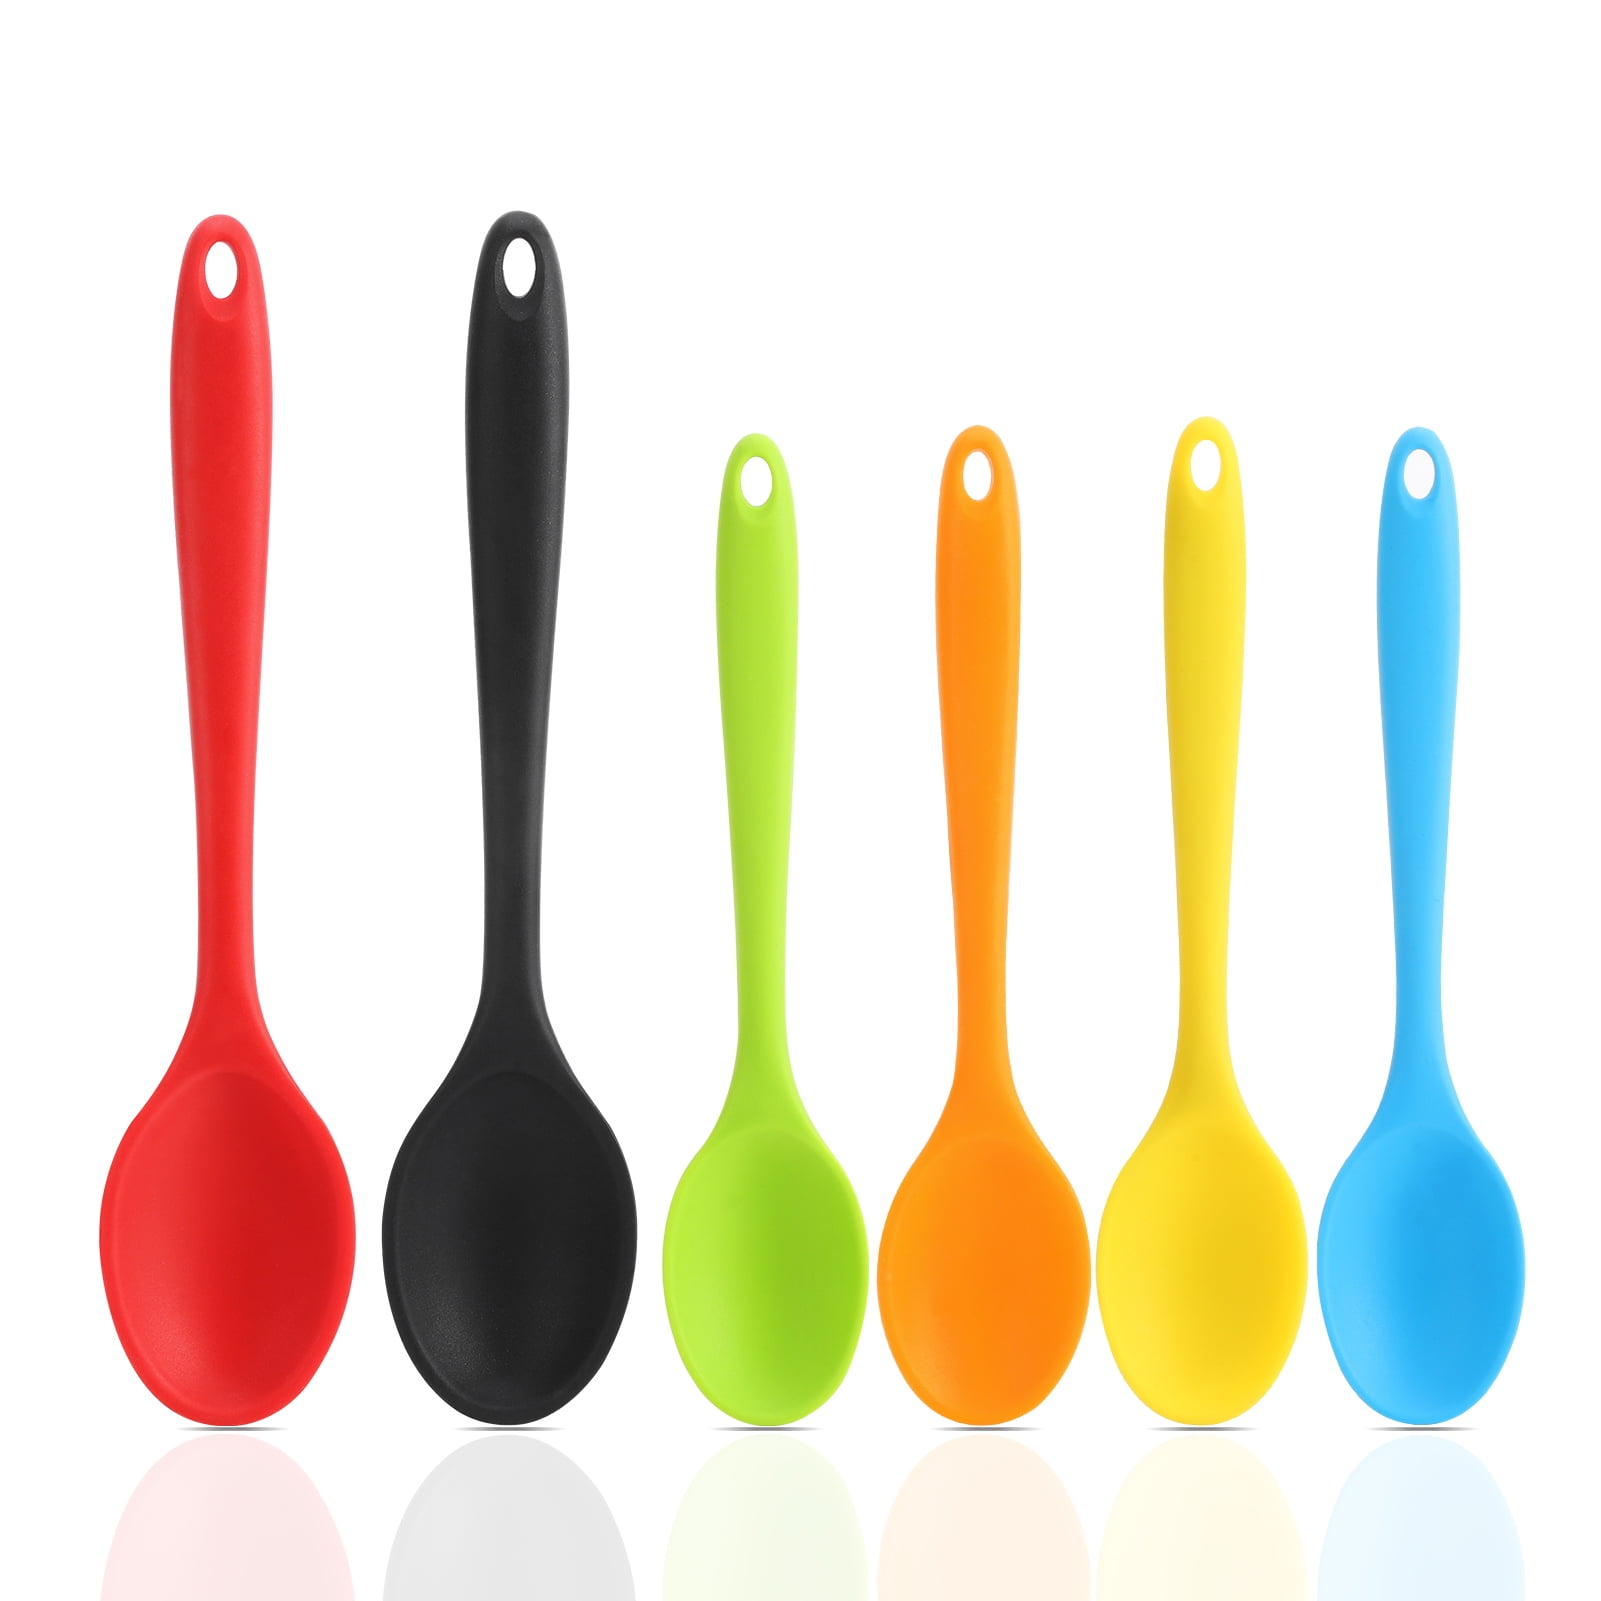 Silicone Spoon,6 Pieces Nonstick Silicone Spoons for Cooking Silicone  Mixing Spoons Silicone Cooking Spoons Set Baking Stirring Mixing Serving  Tools